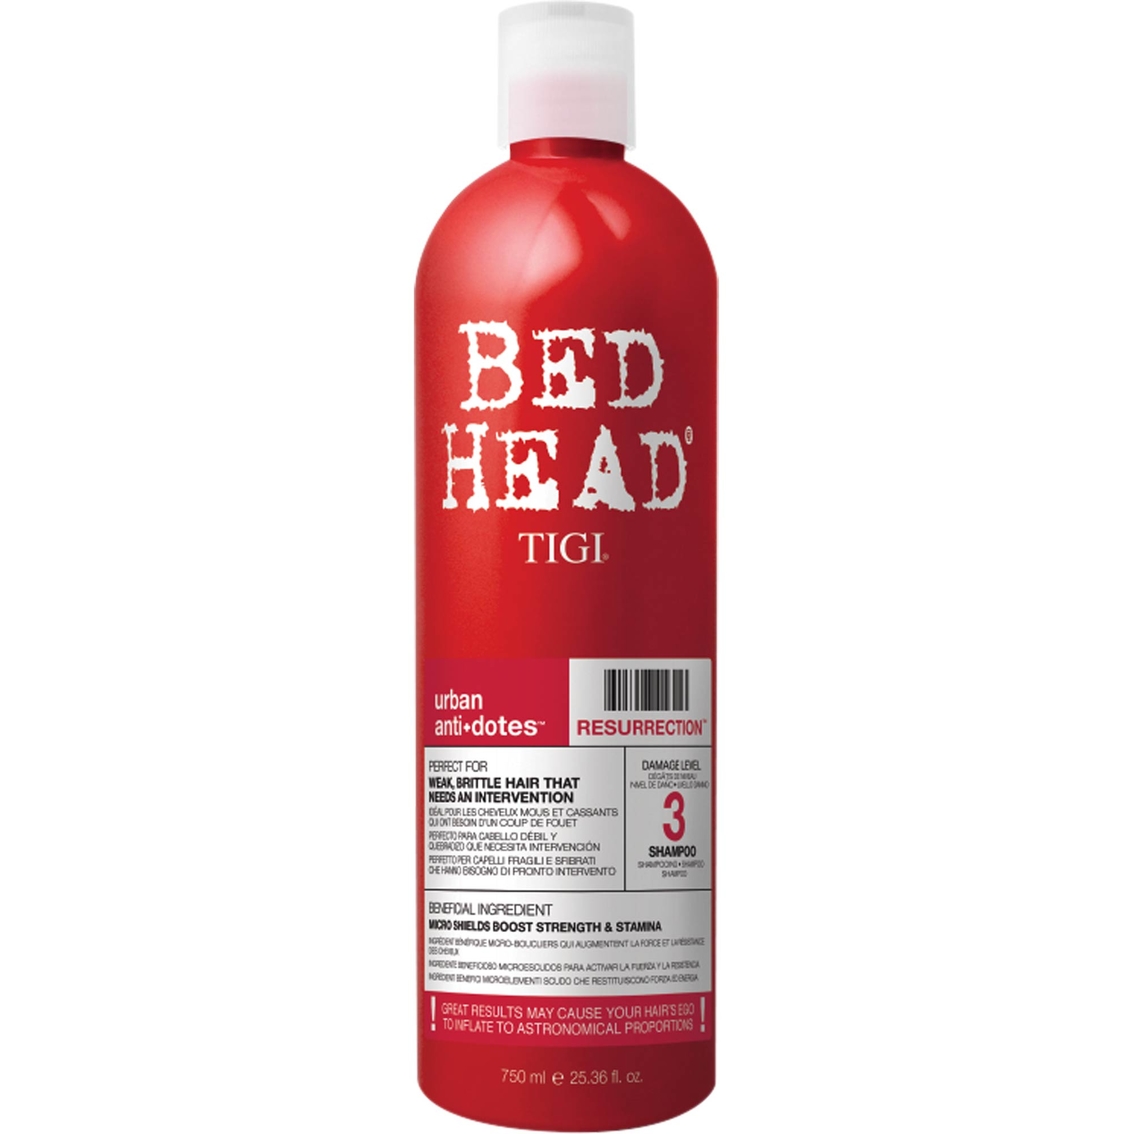 Bed Head by TIGI Urban Antidotes Resurrection Shampoo - Image 2 of 2